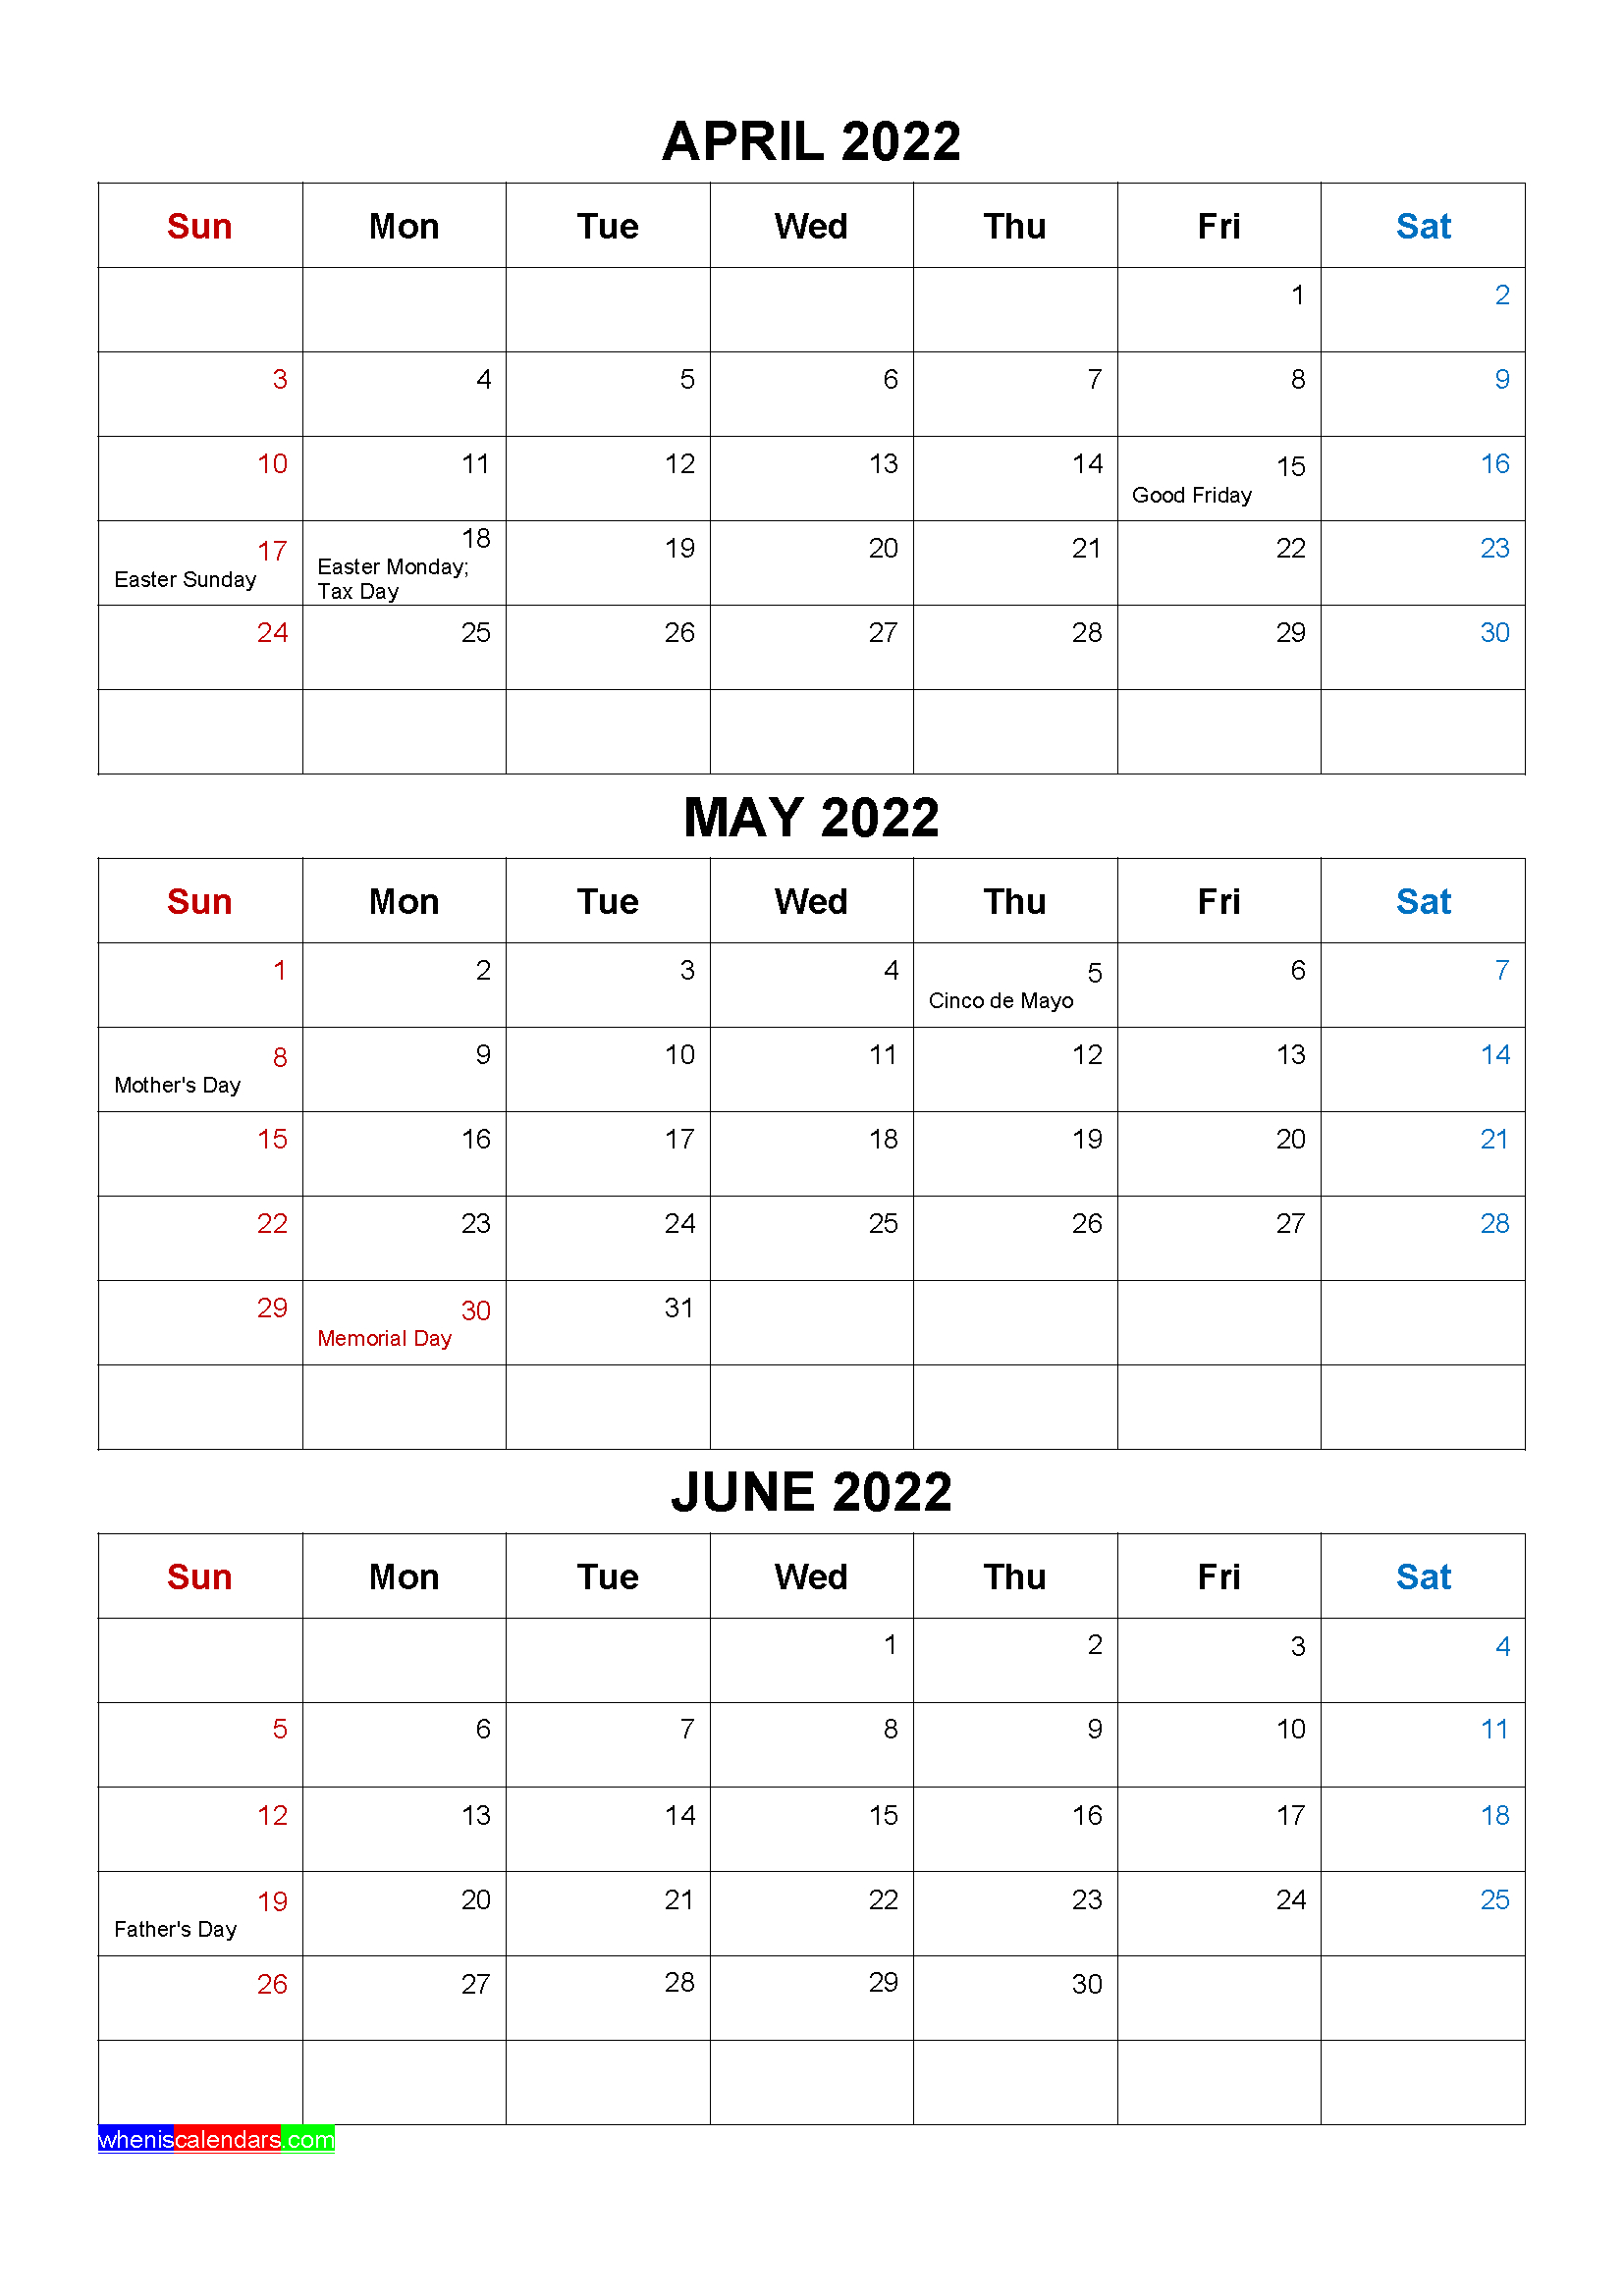 Get May 6 2022 Calendar